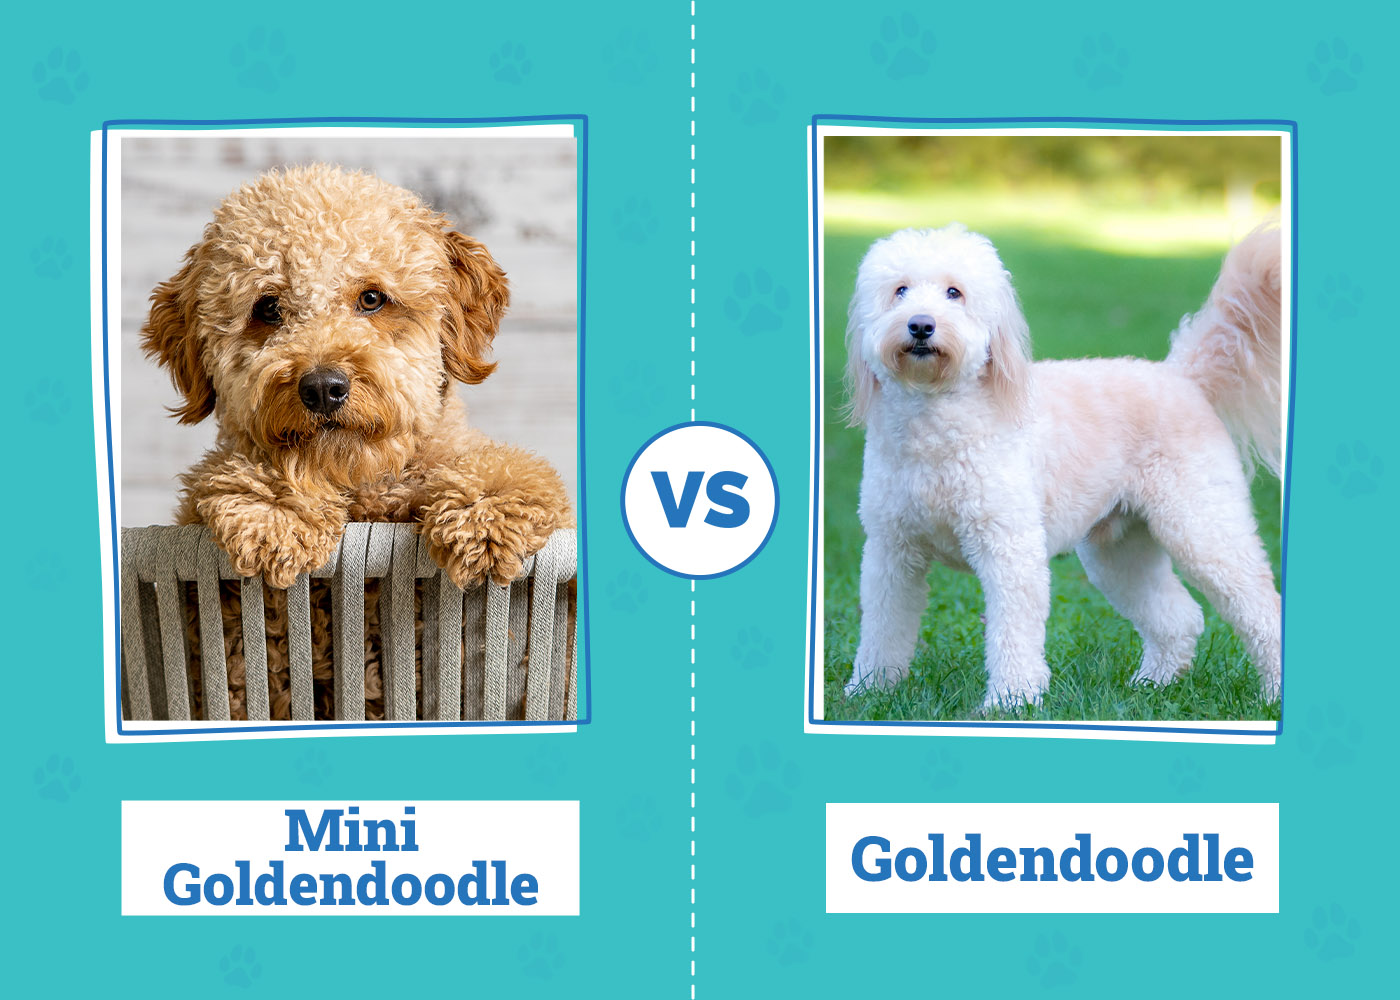 Mini Goldendoodle vs Goldendoodle